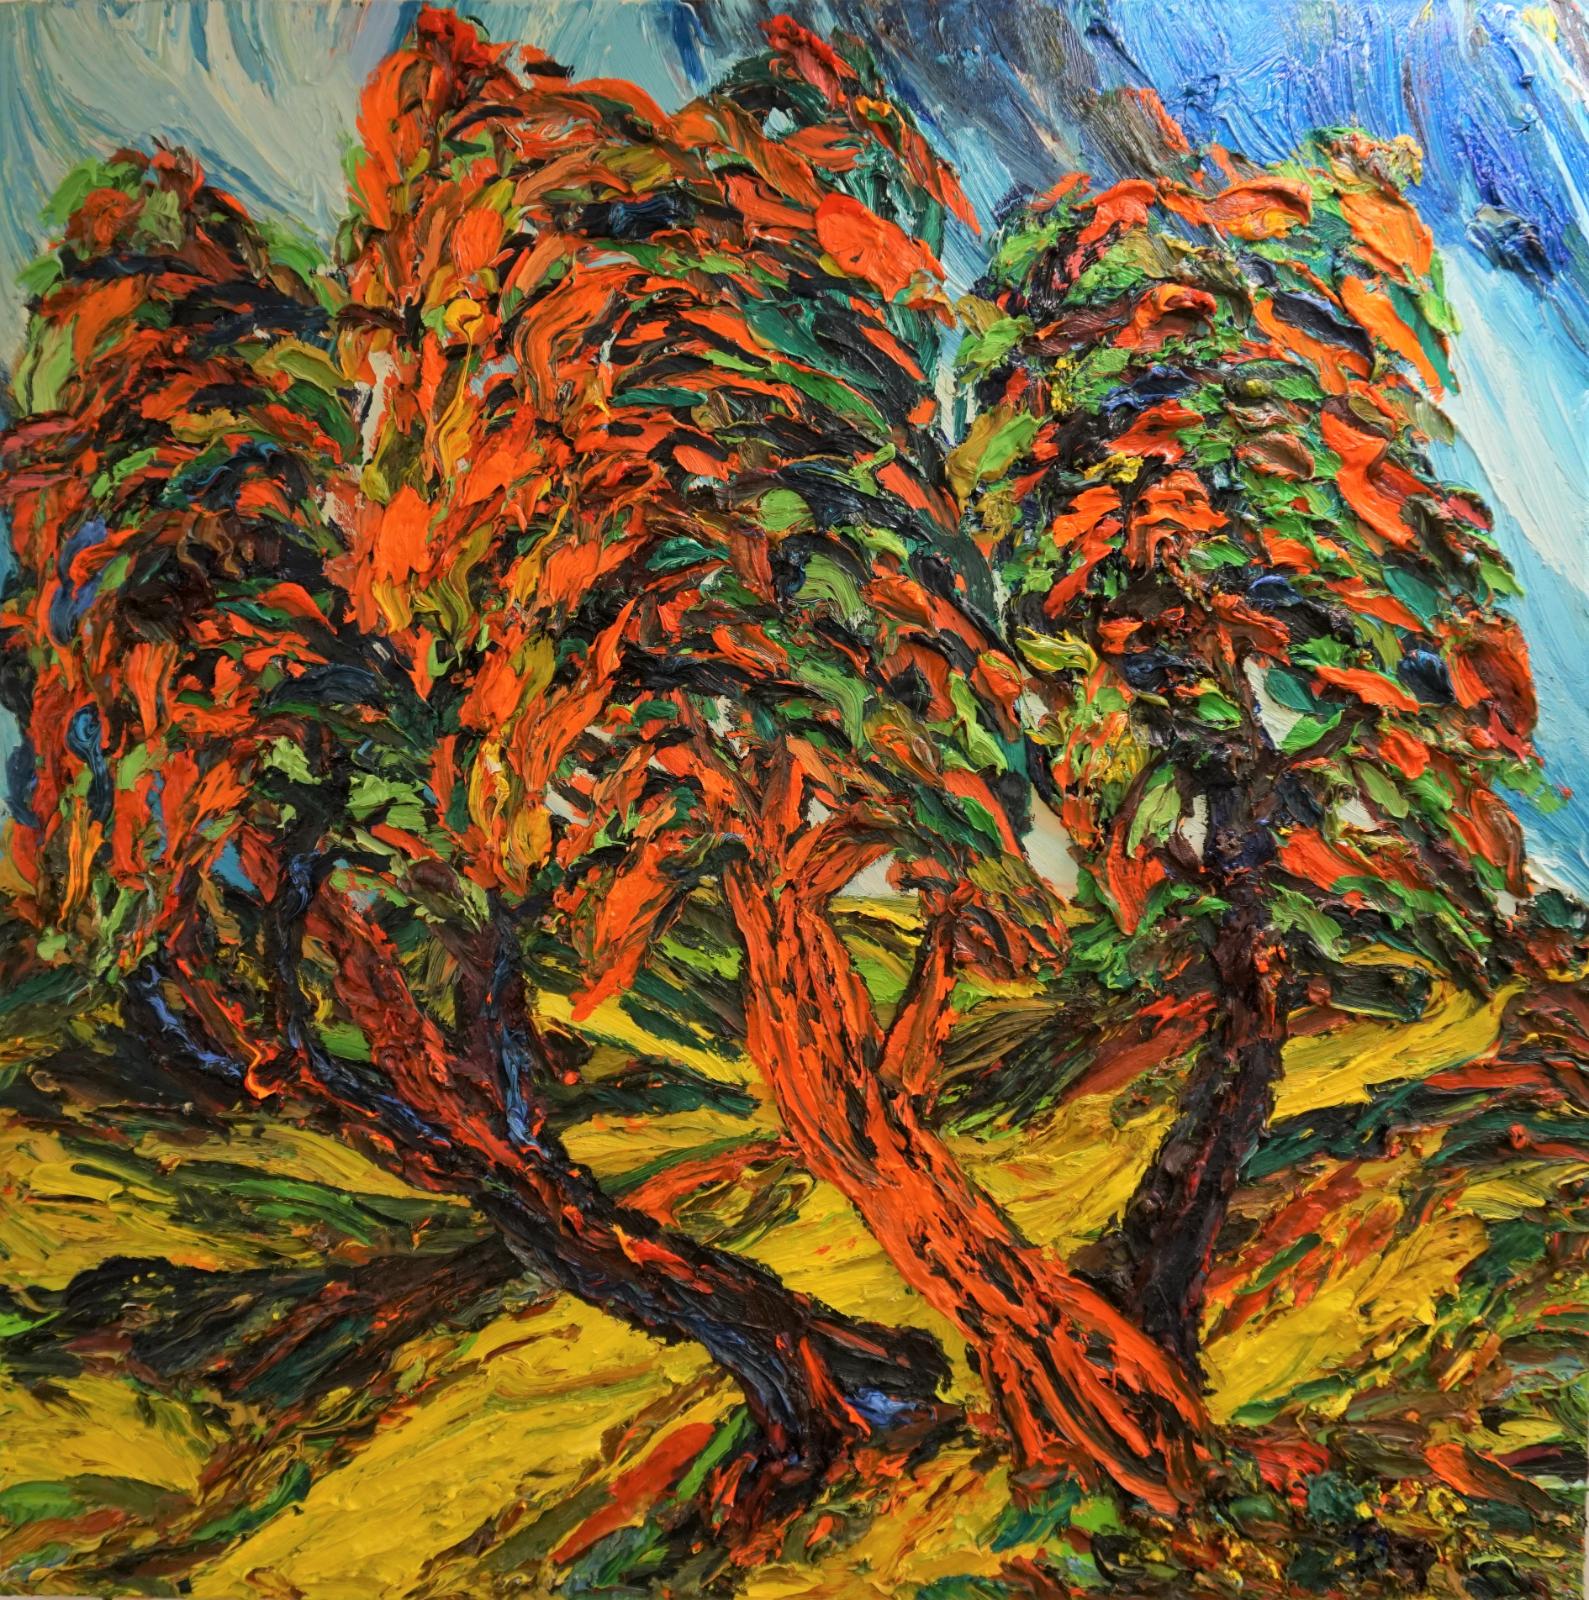 Harry Meyer, Bäume, 2018. Öl auf Leinwand, 125 x 125 cm, Preis auf Anfrage, mey035ko